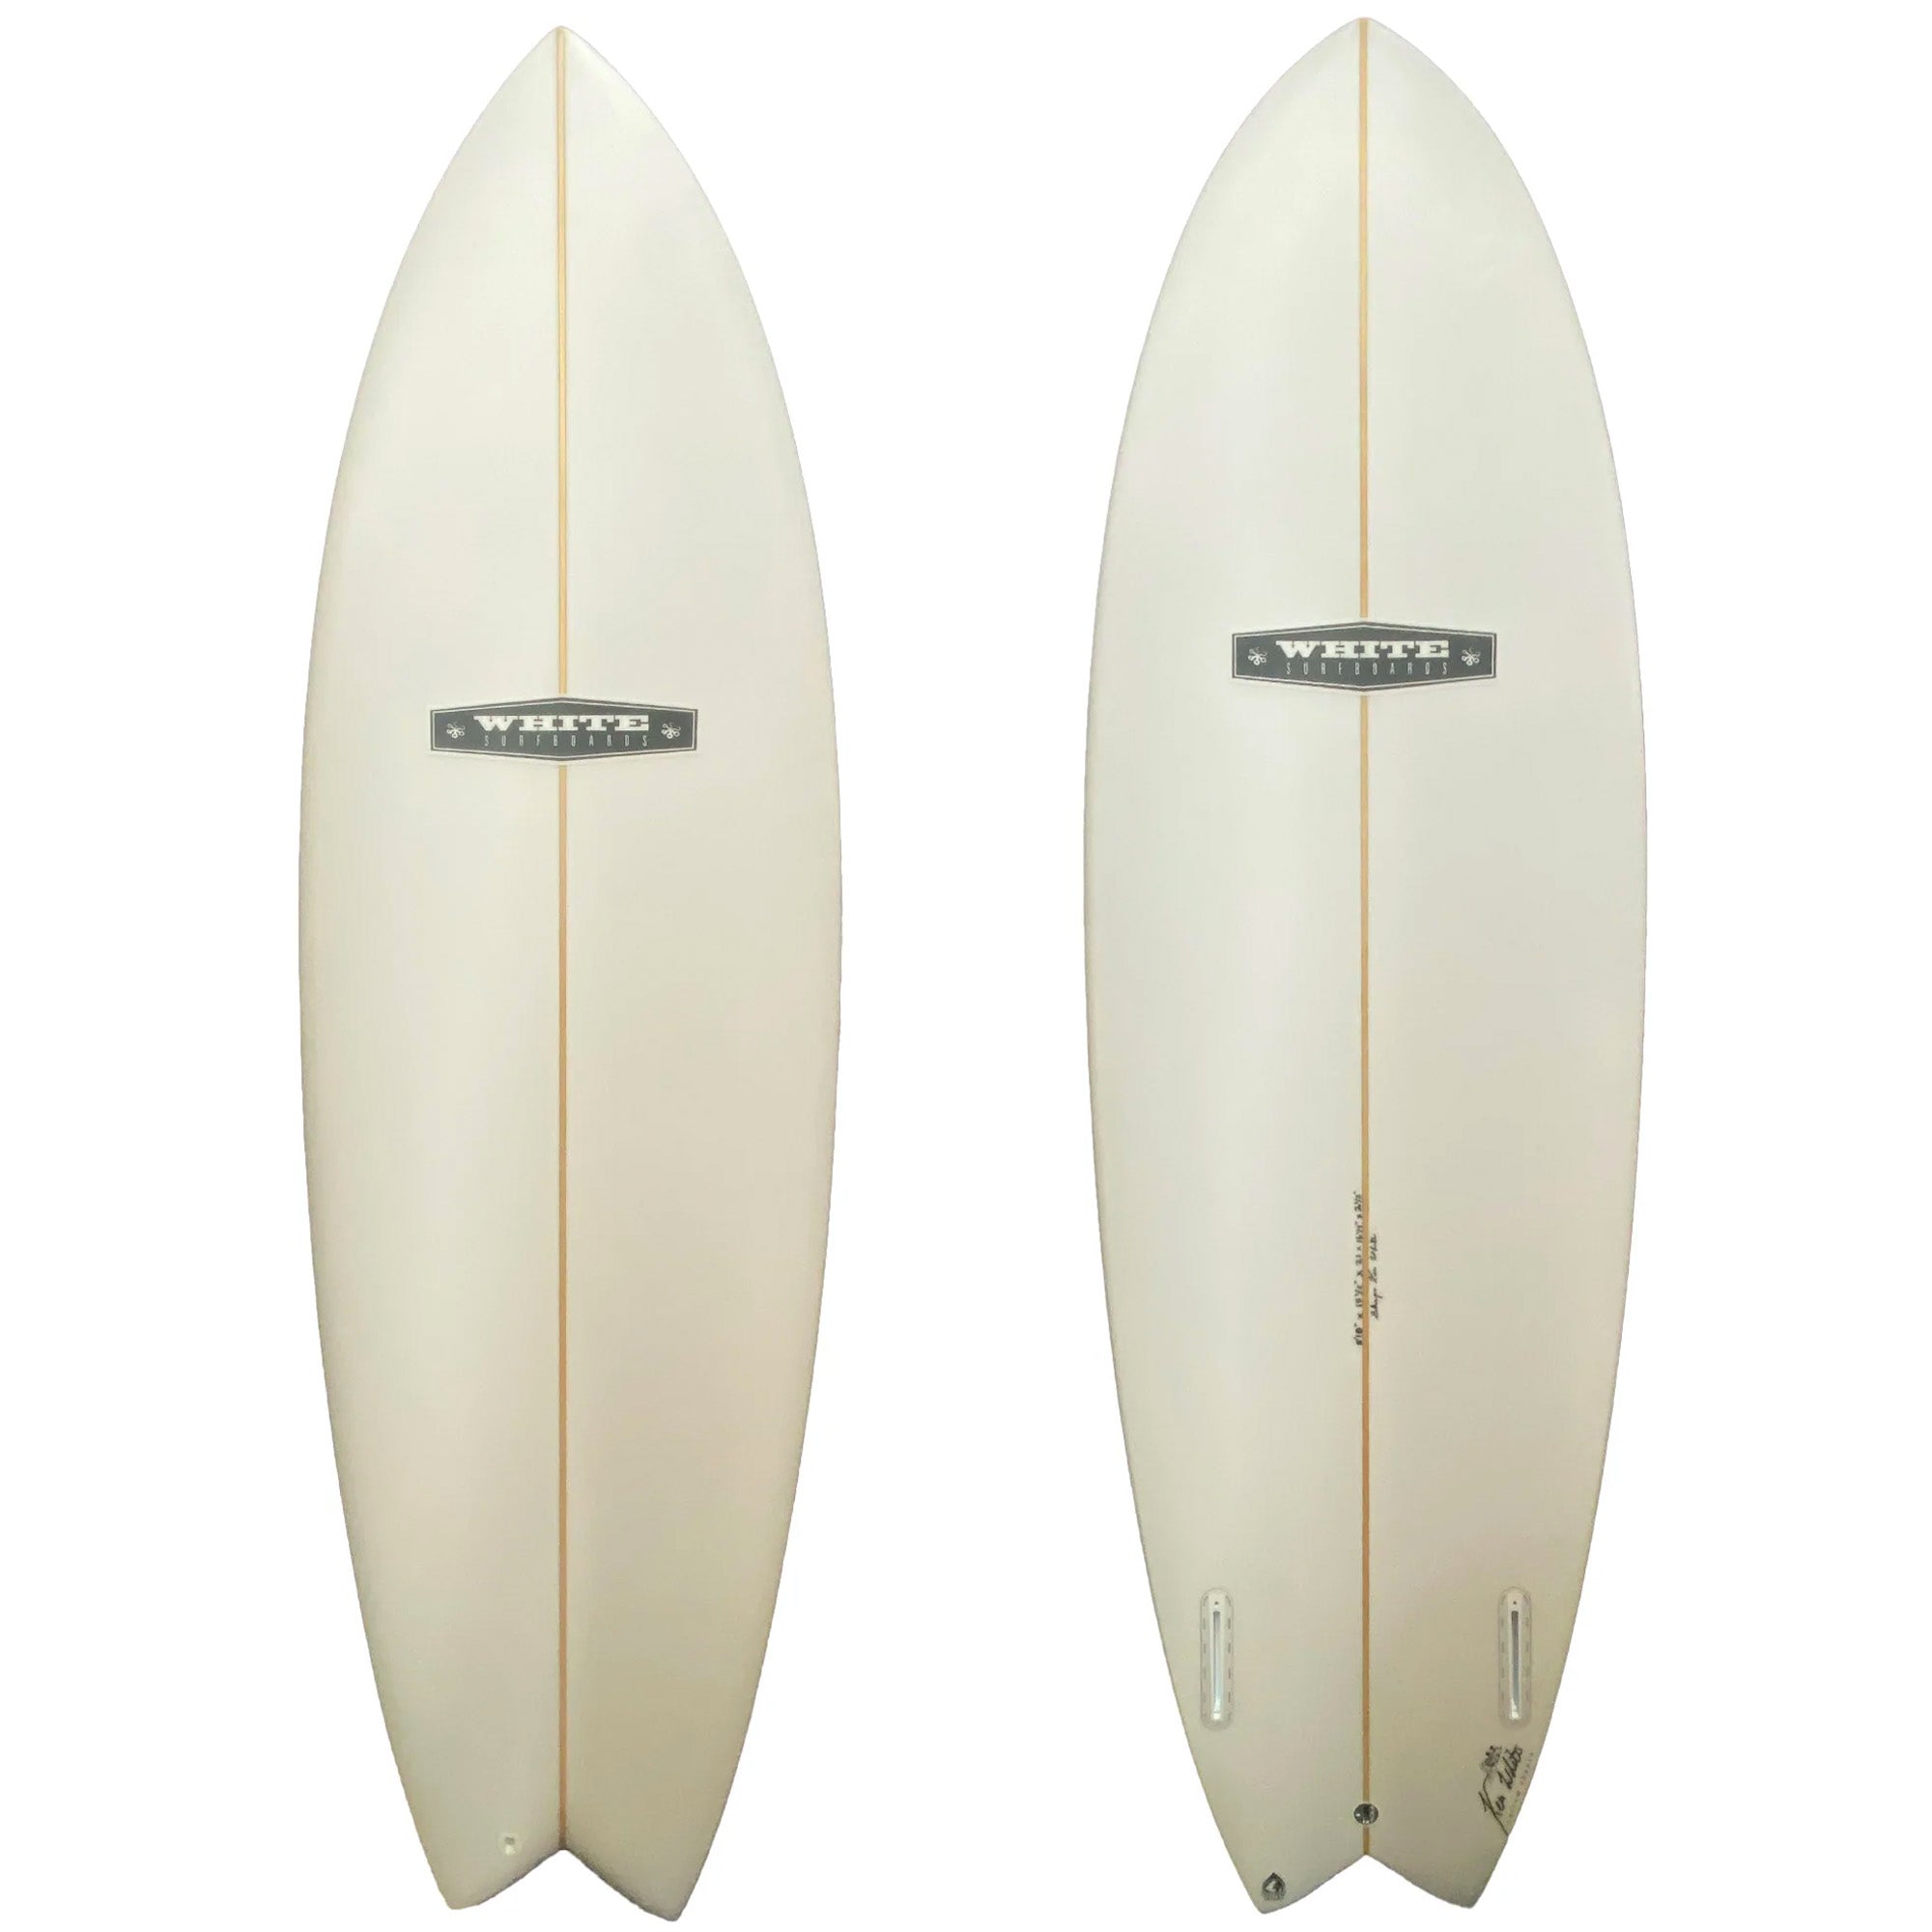 Ken White Knubster Surfboard - Futures